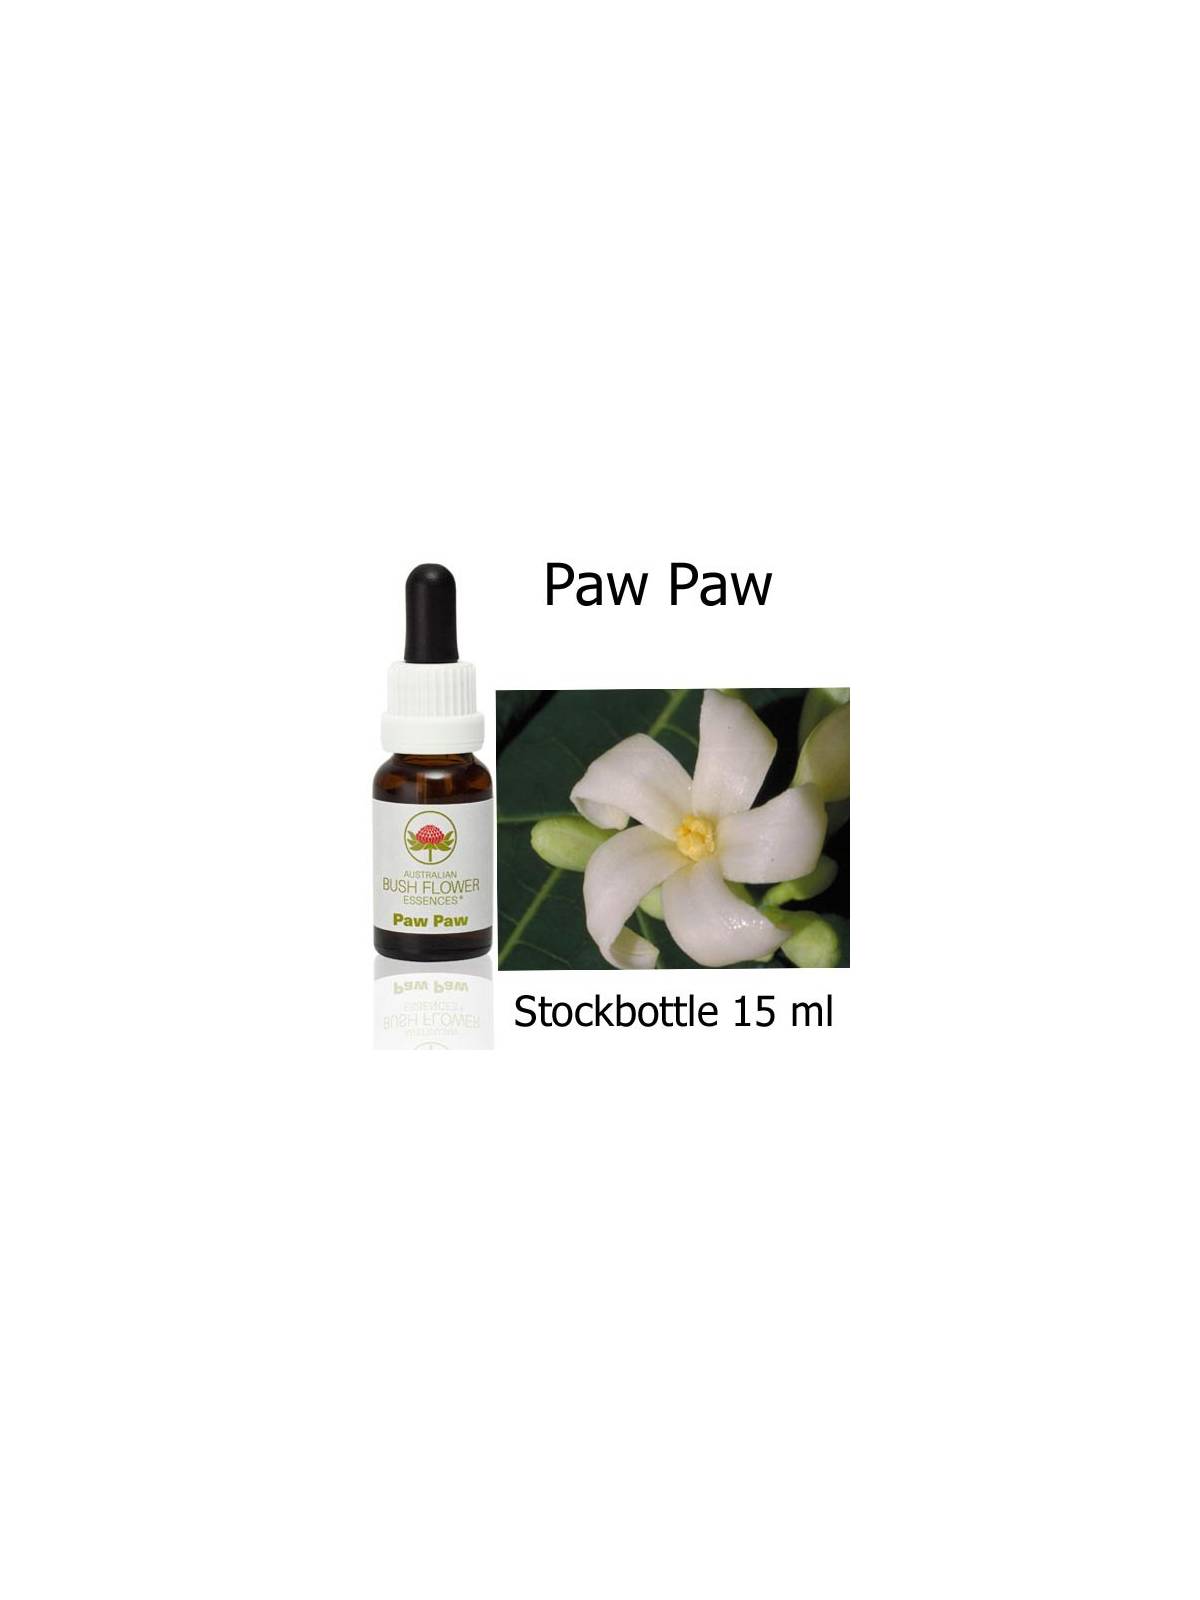 Paw Paw Australian Bush Flower Essences stockbottles